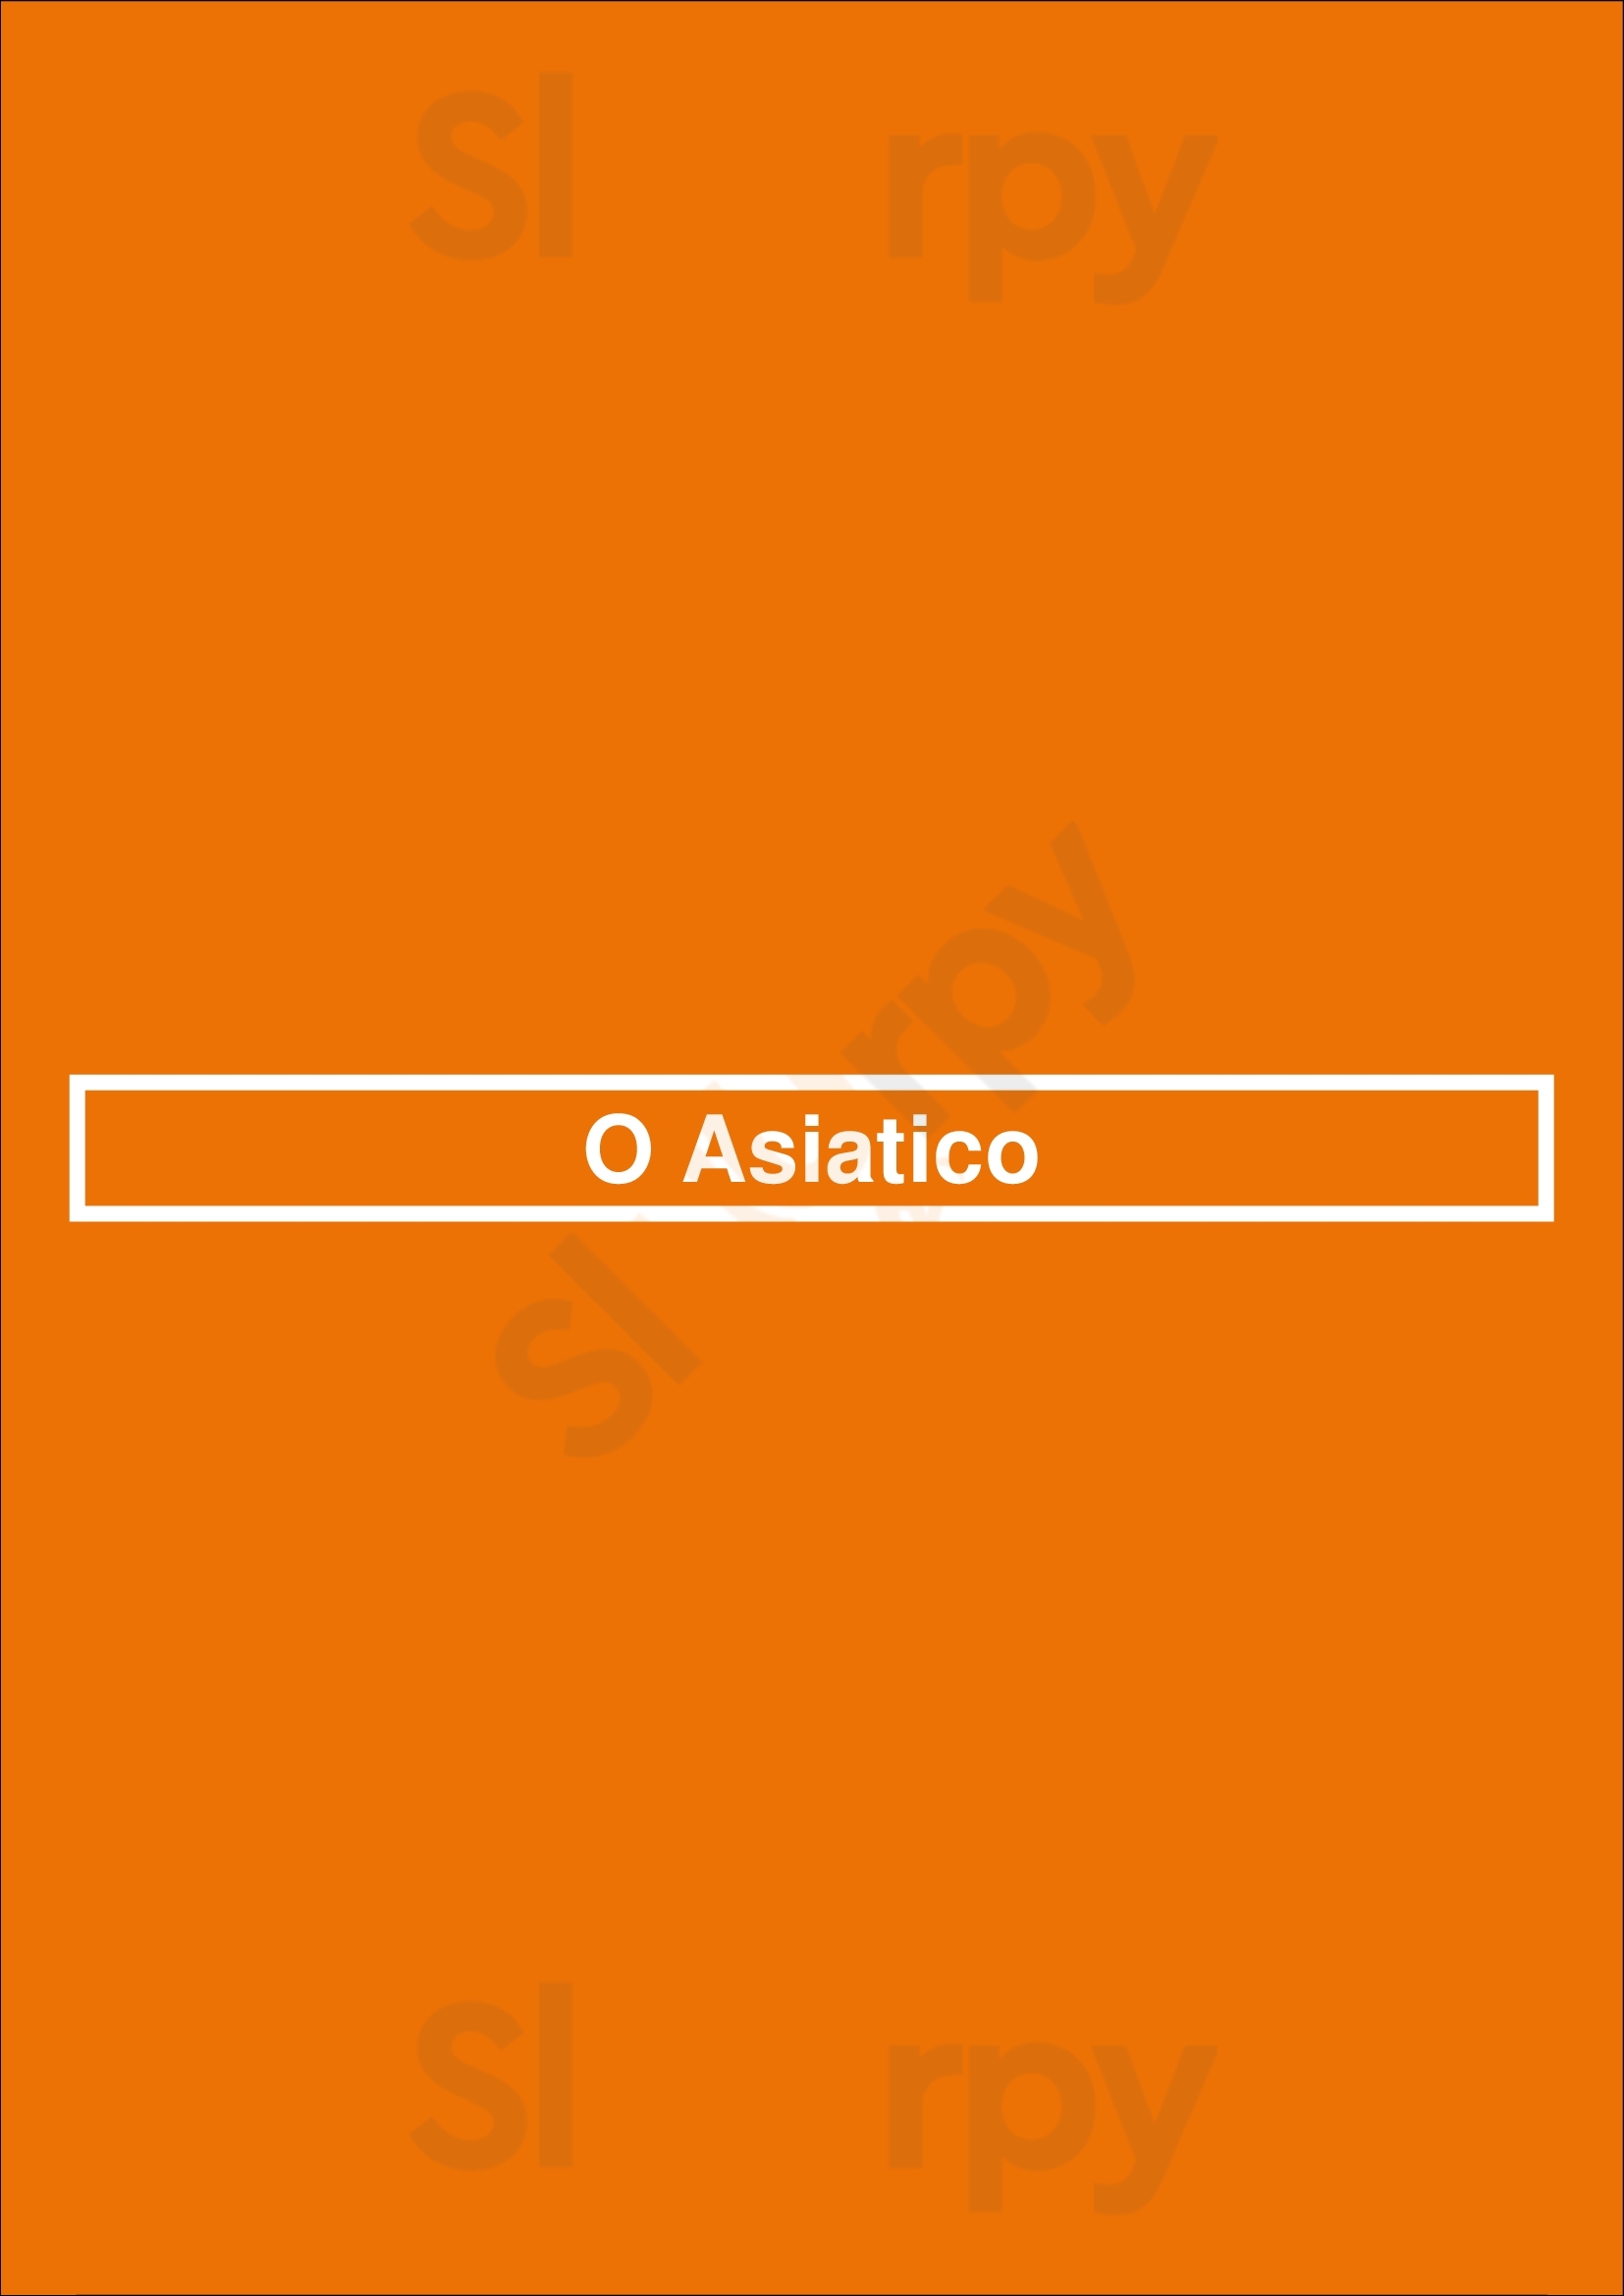 O Asiatico Lisboa Menu - 1